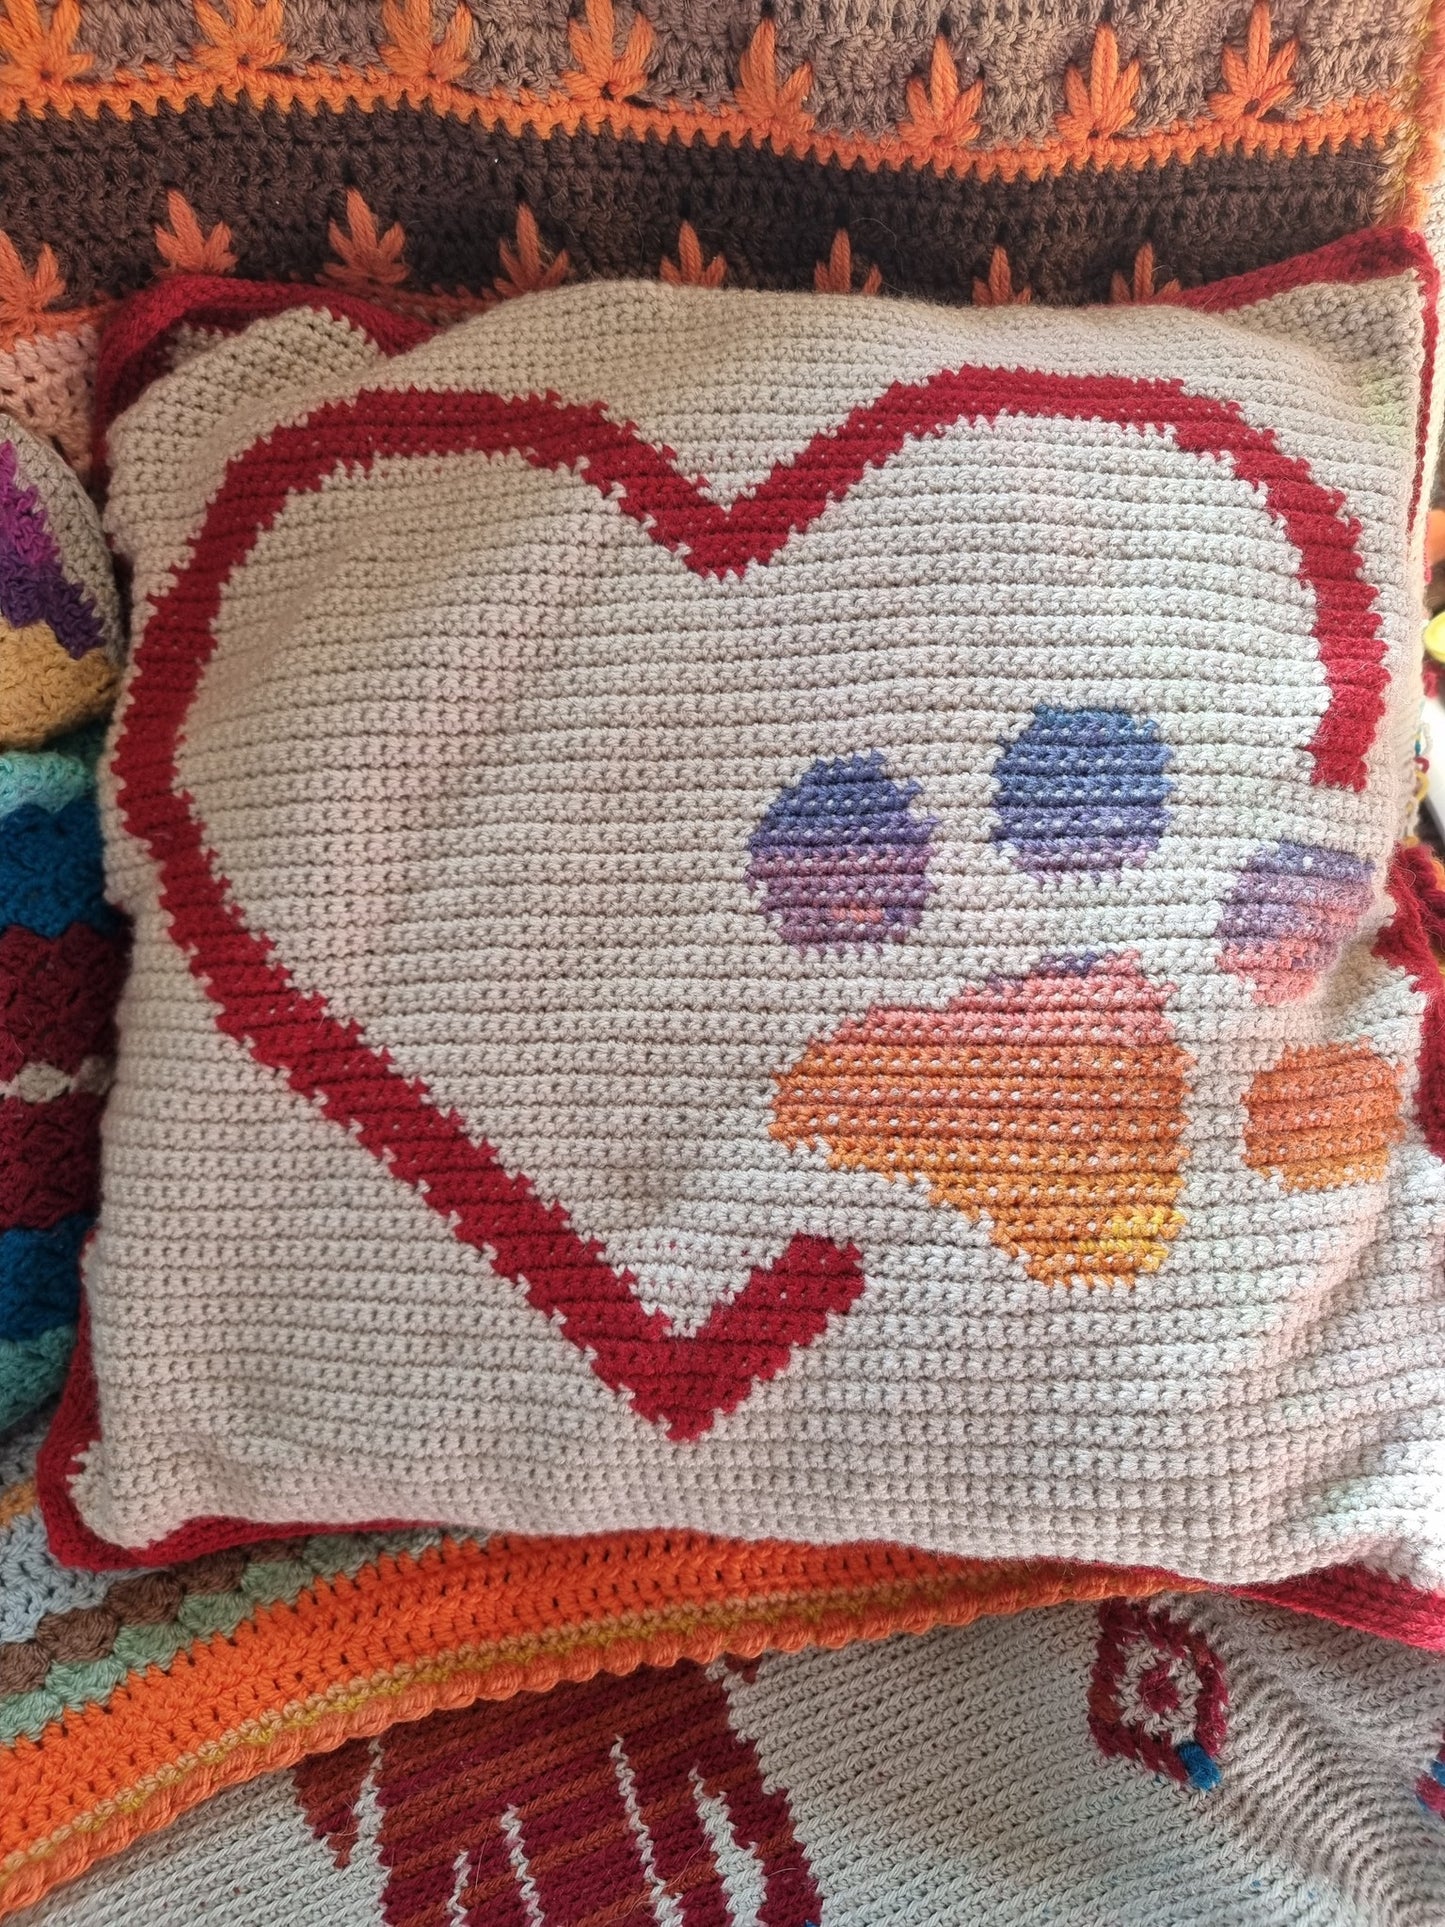 Heart Paw Crochet Pillow Pattern